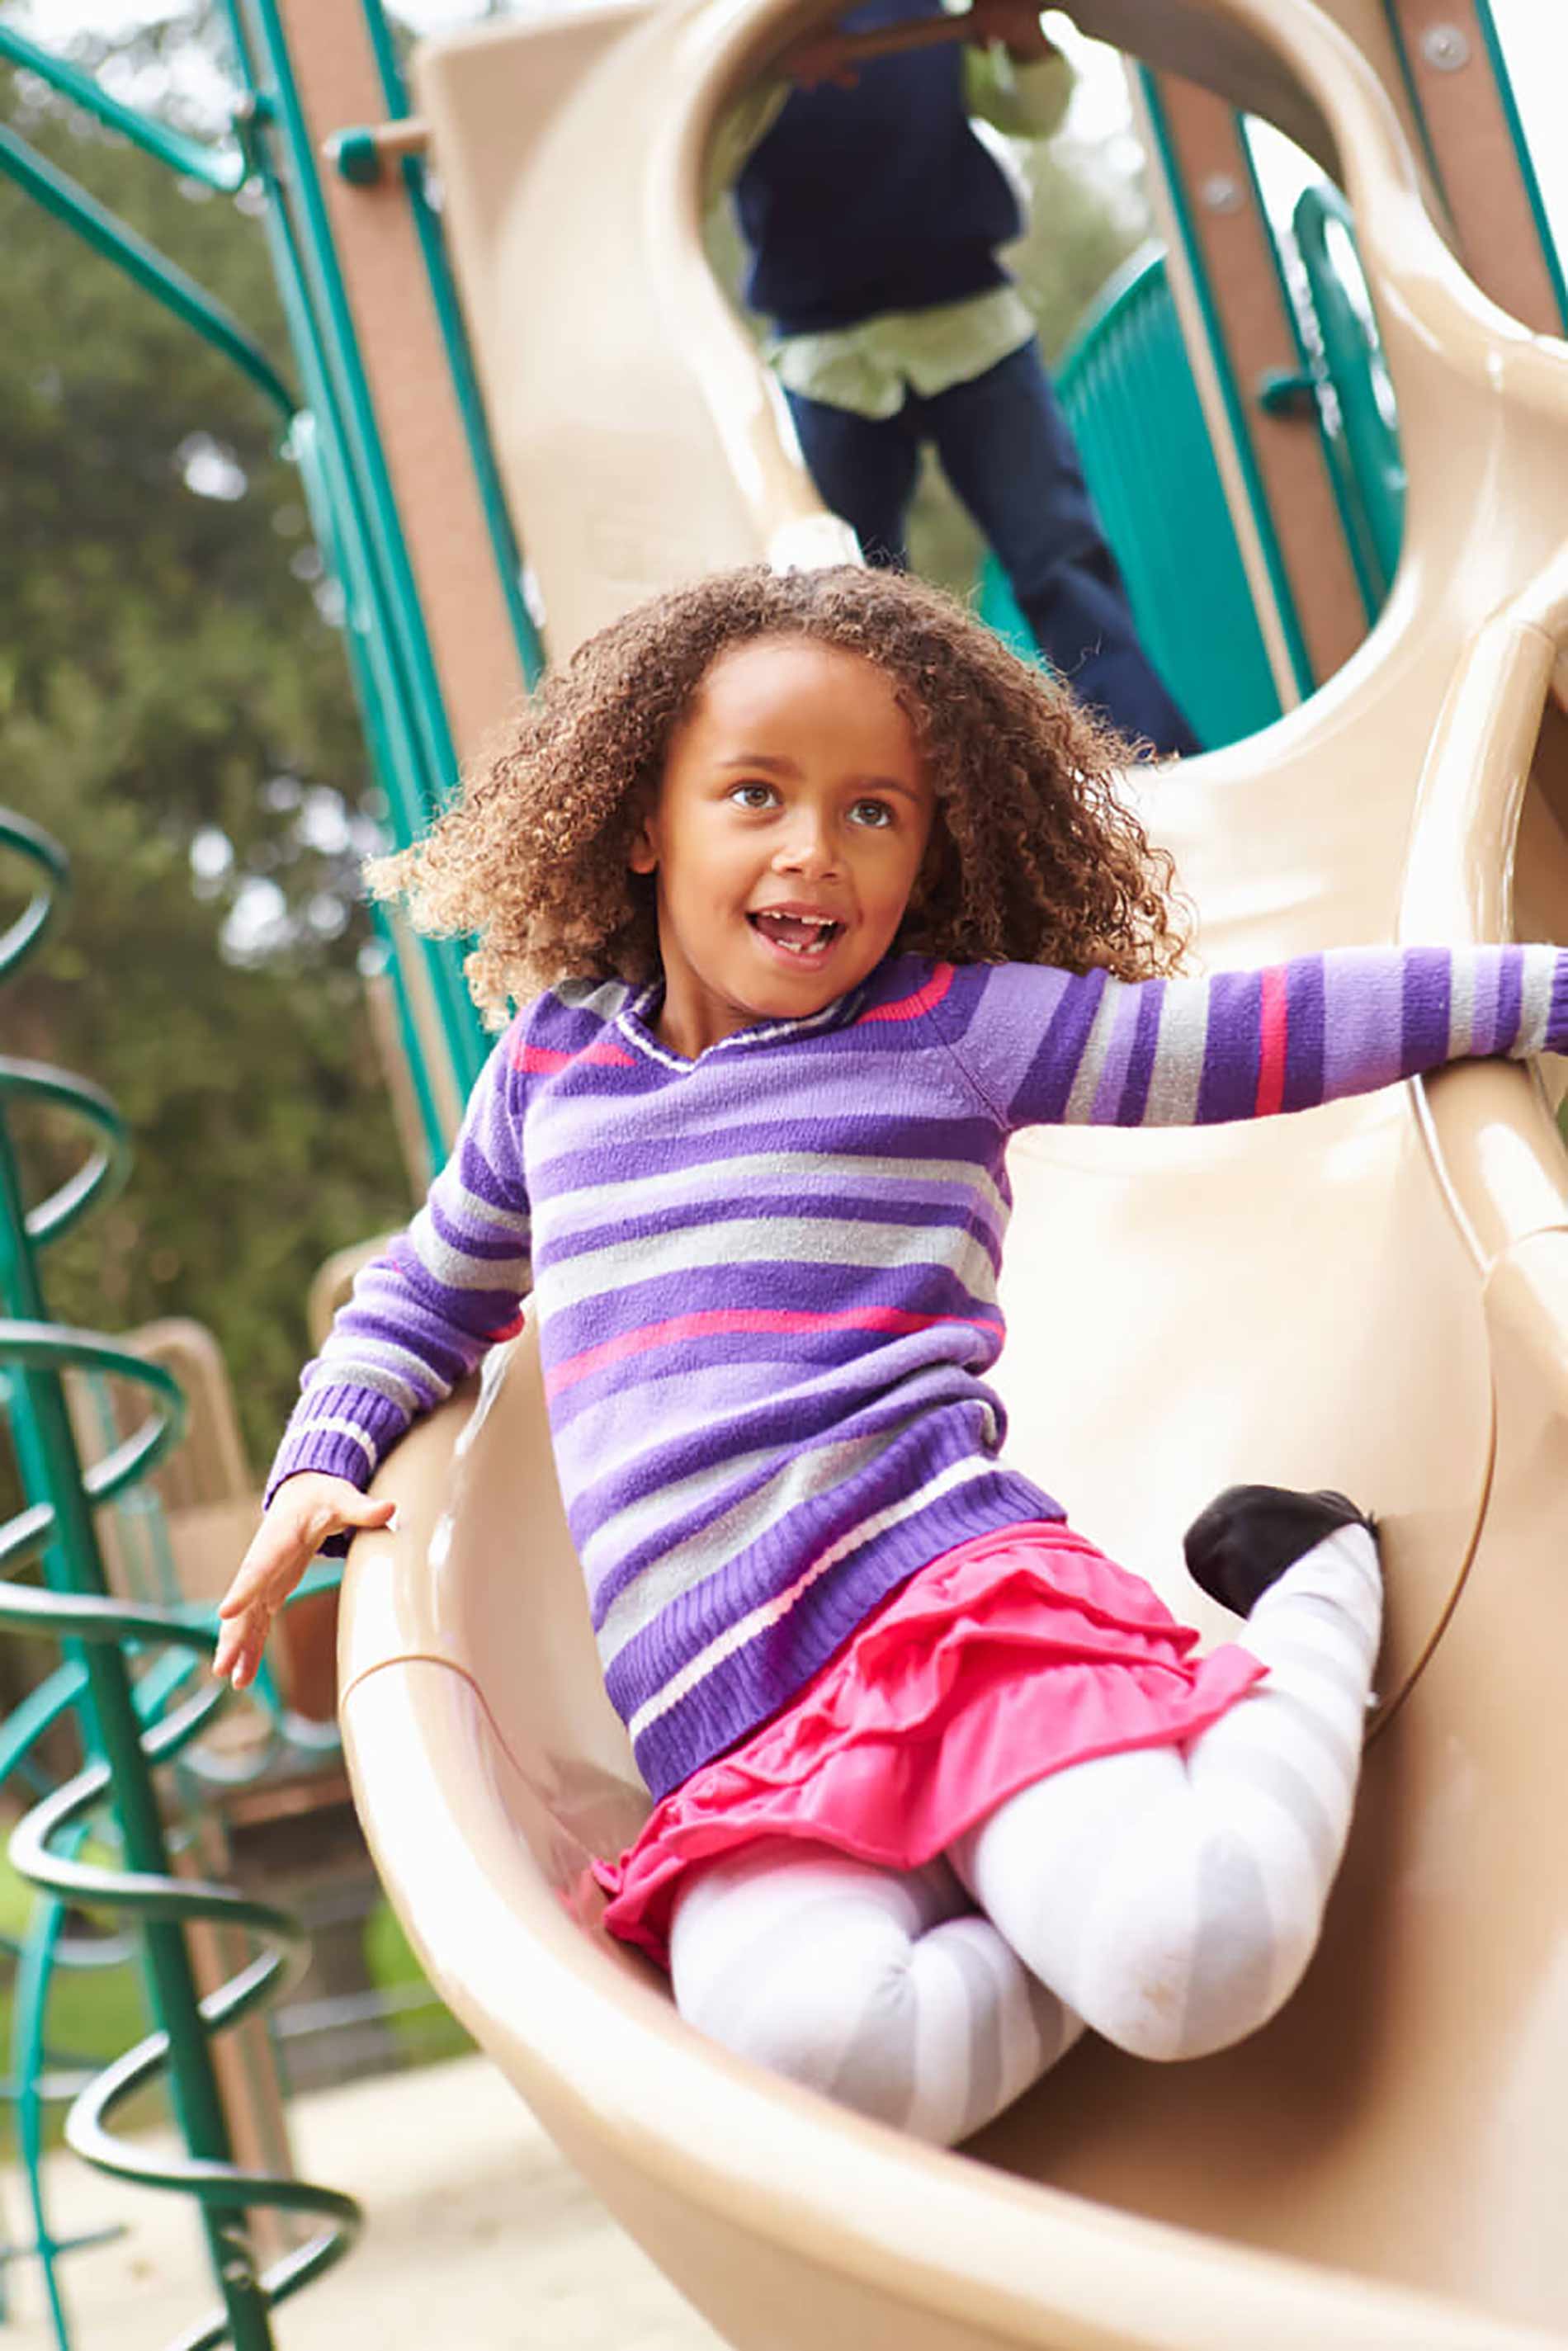 Kid sliding on playground